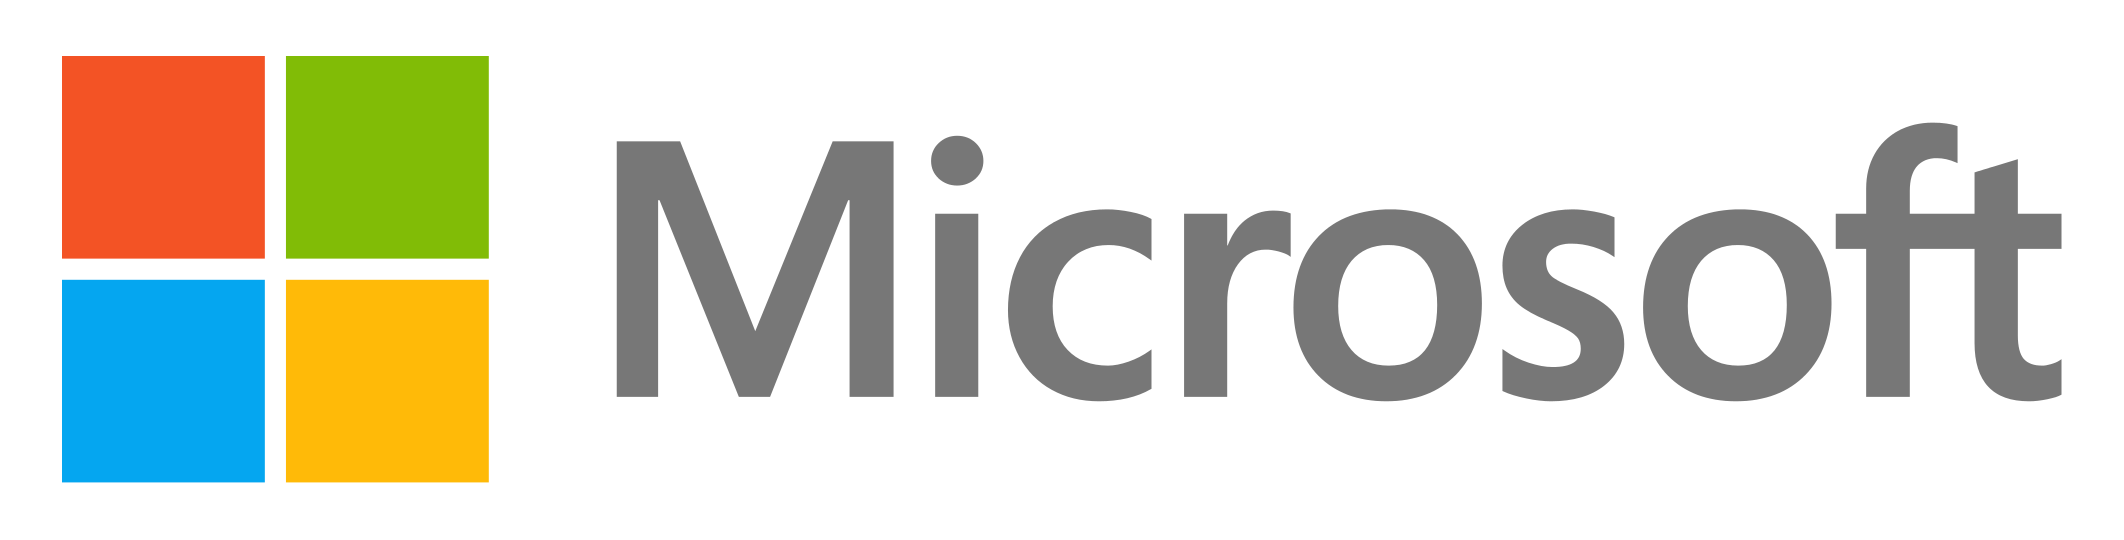 kisspng-technical-support-scam-microsoft-windows-hewlett-p-microsoft-logo-5a73ef983d0320.9232200515175474162499